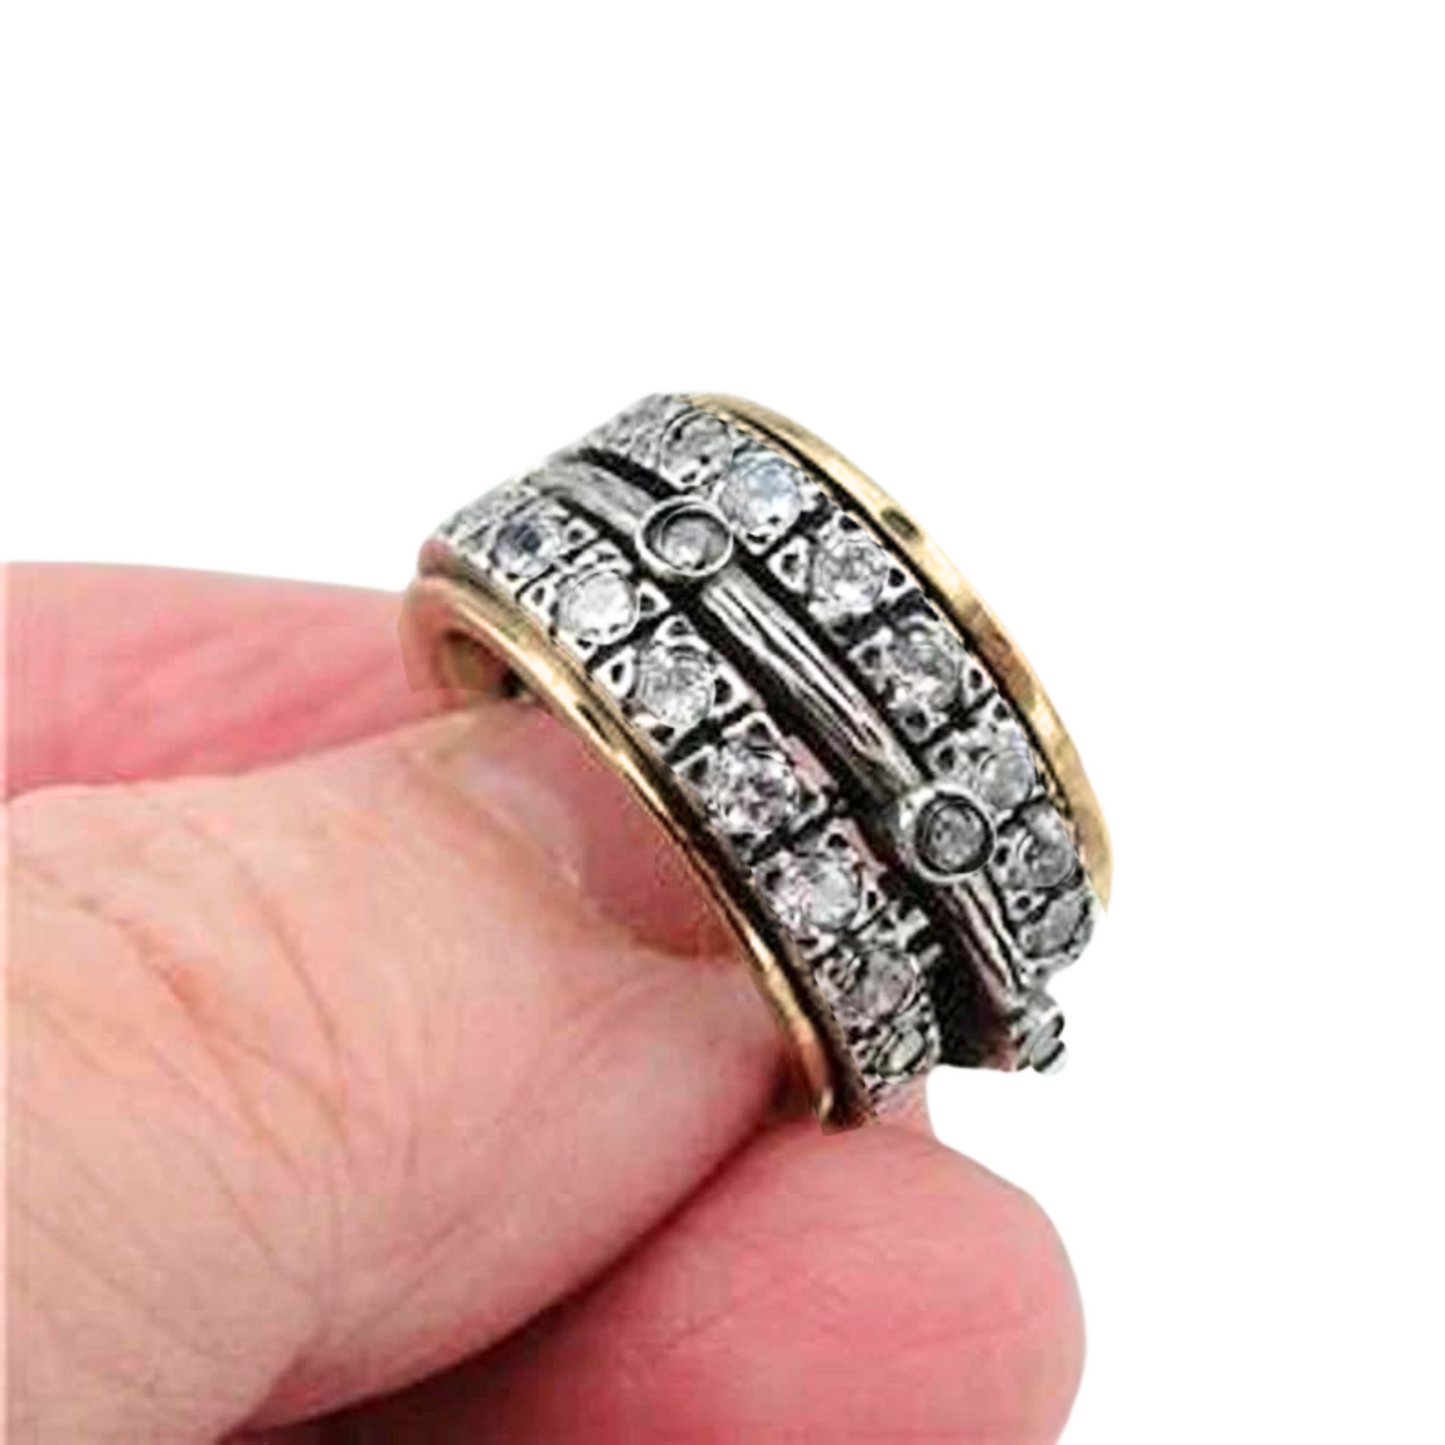 Israeli jewelry, Israeli design, gift for her, unisex, unisex jewelry, unisex ring, gemstone ring, 